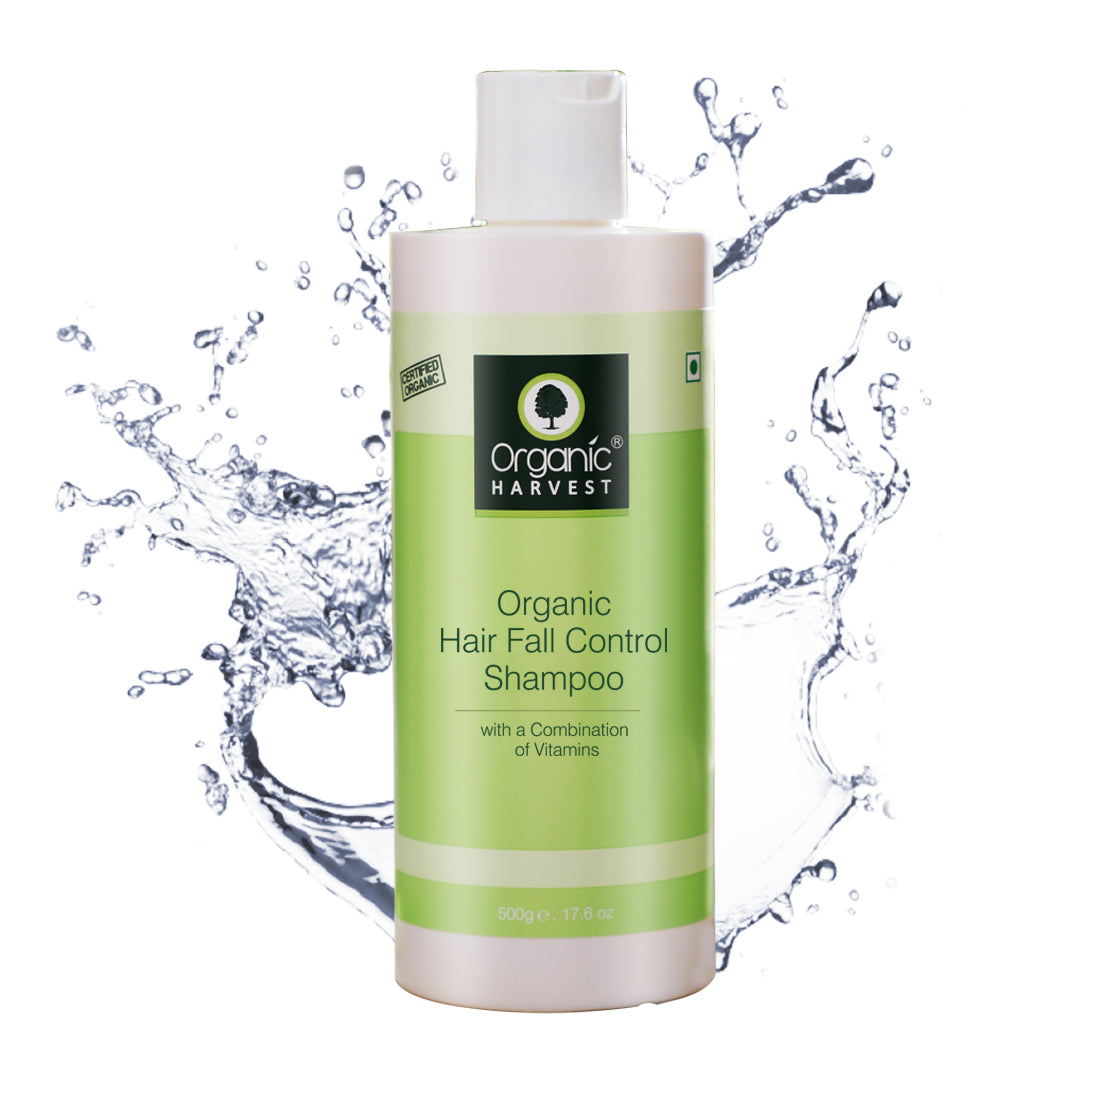 Hairfall Control Shampoo: Castor Oil | Anti Hair Fall Shampoo for Dry Hair